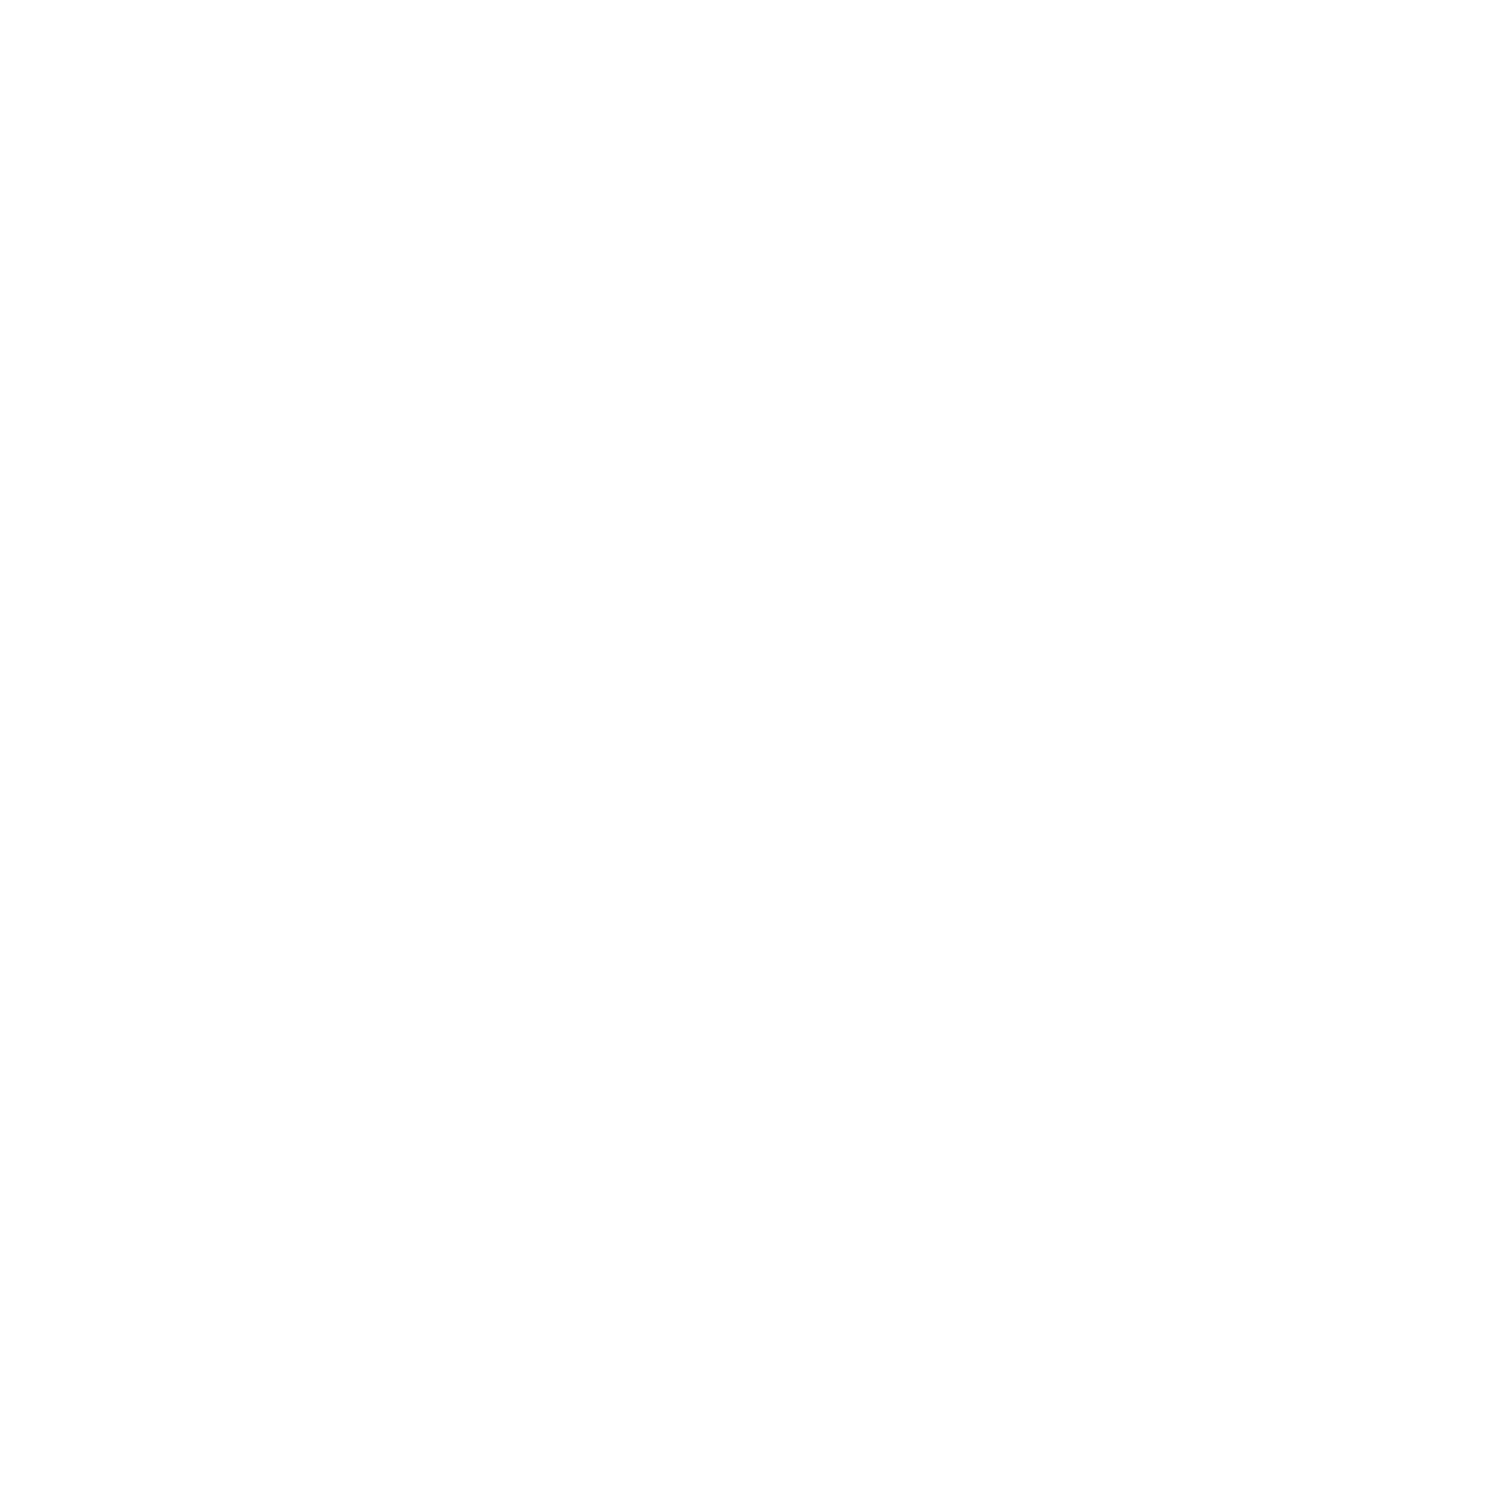 G&D Security